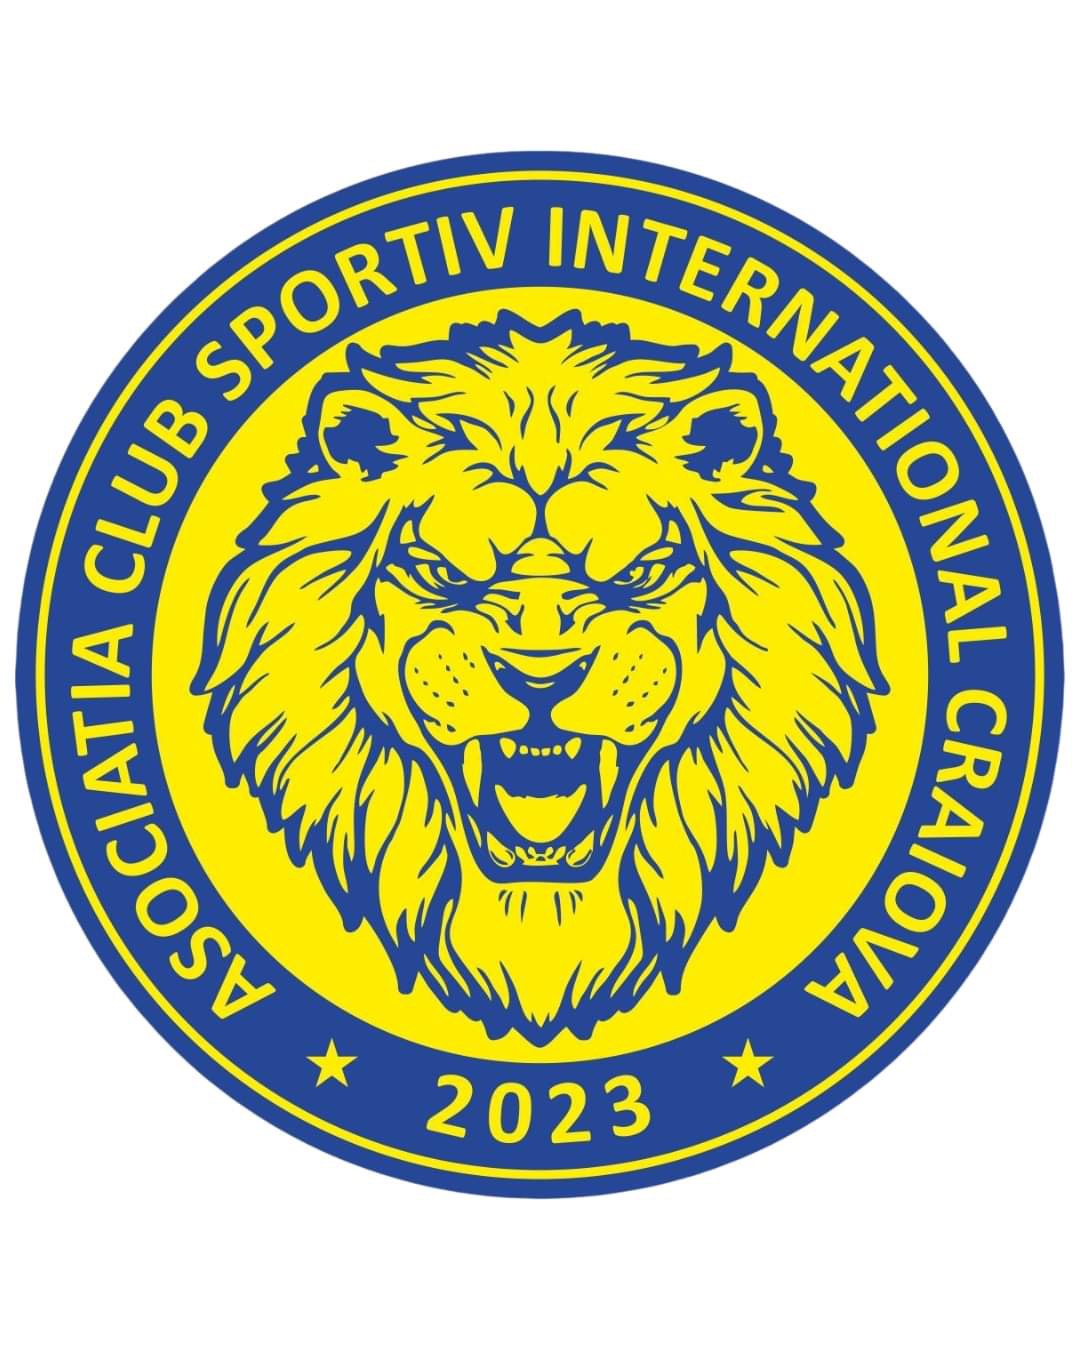 Club Sportiv International Craiova